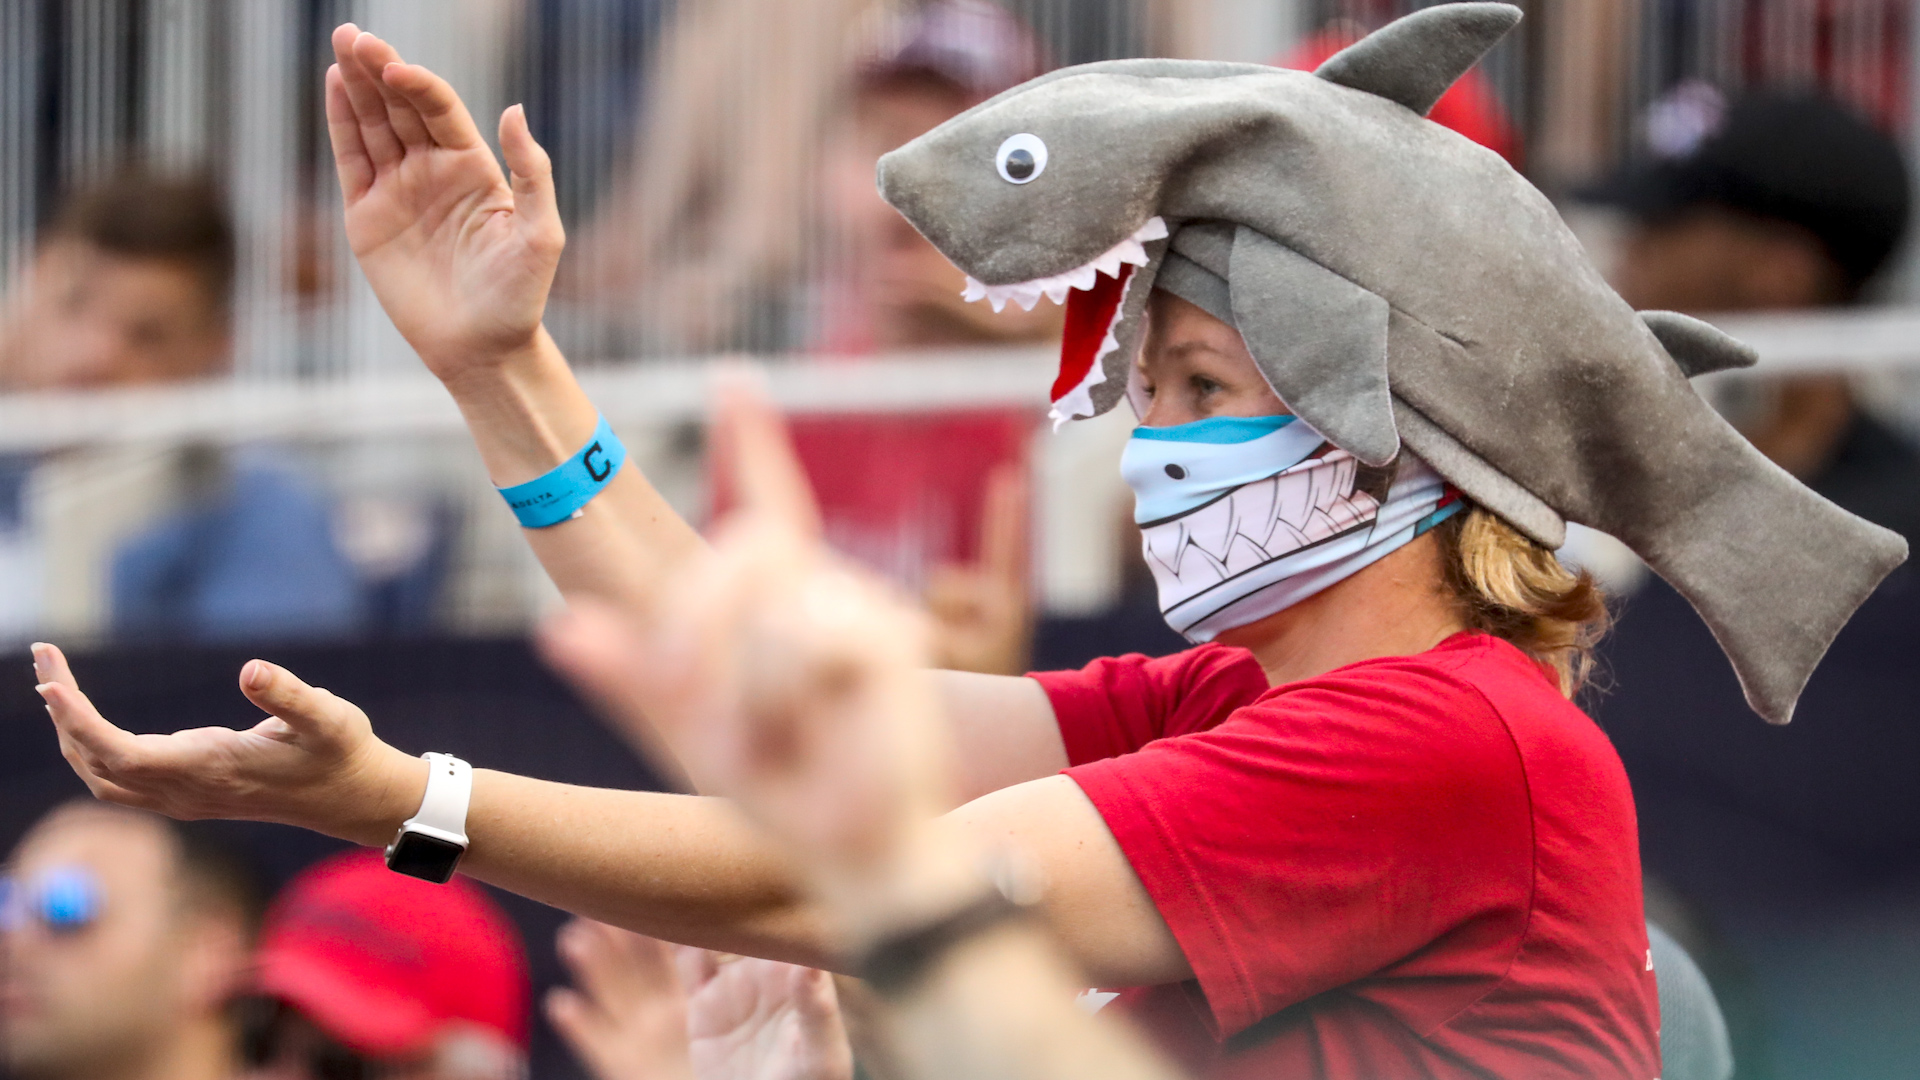 Nationals Inside Baby Shark craze taking over World Series team